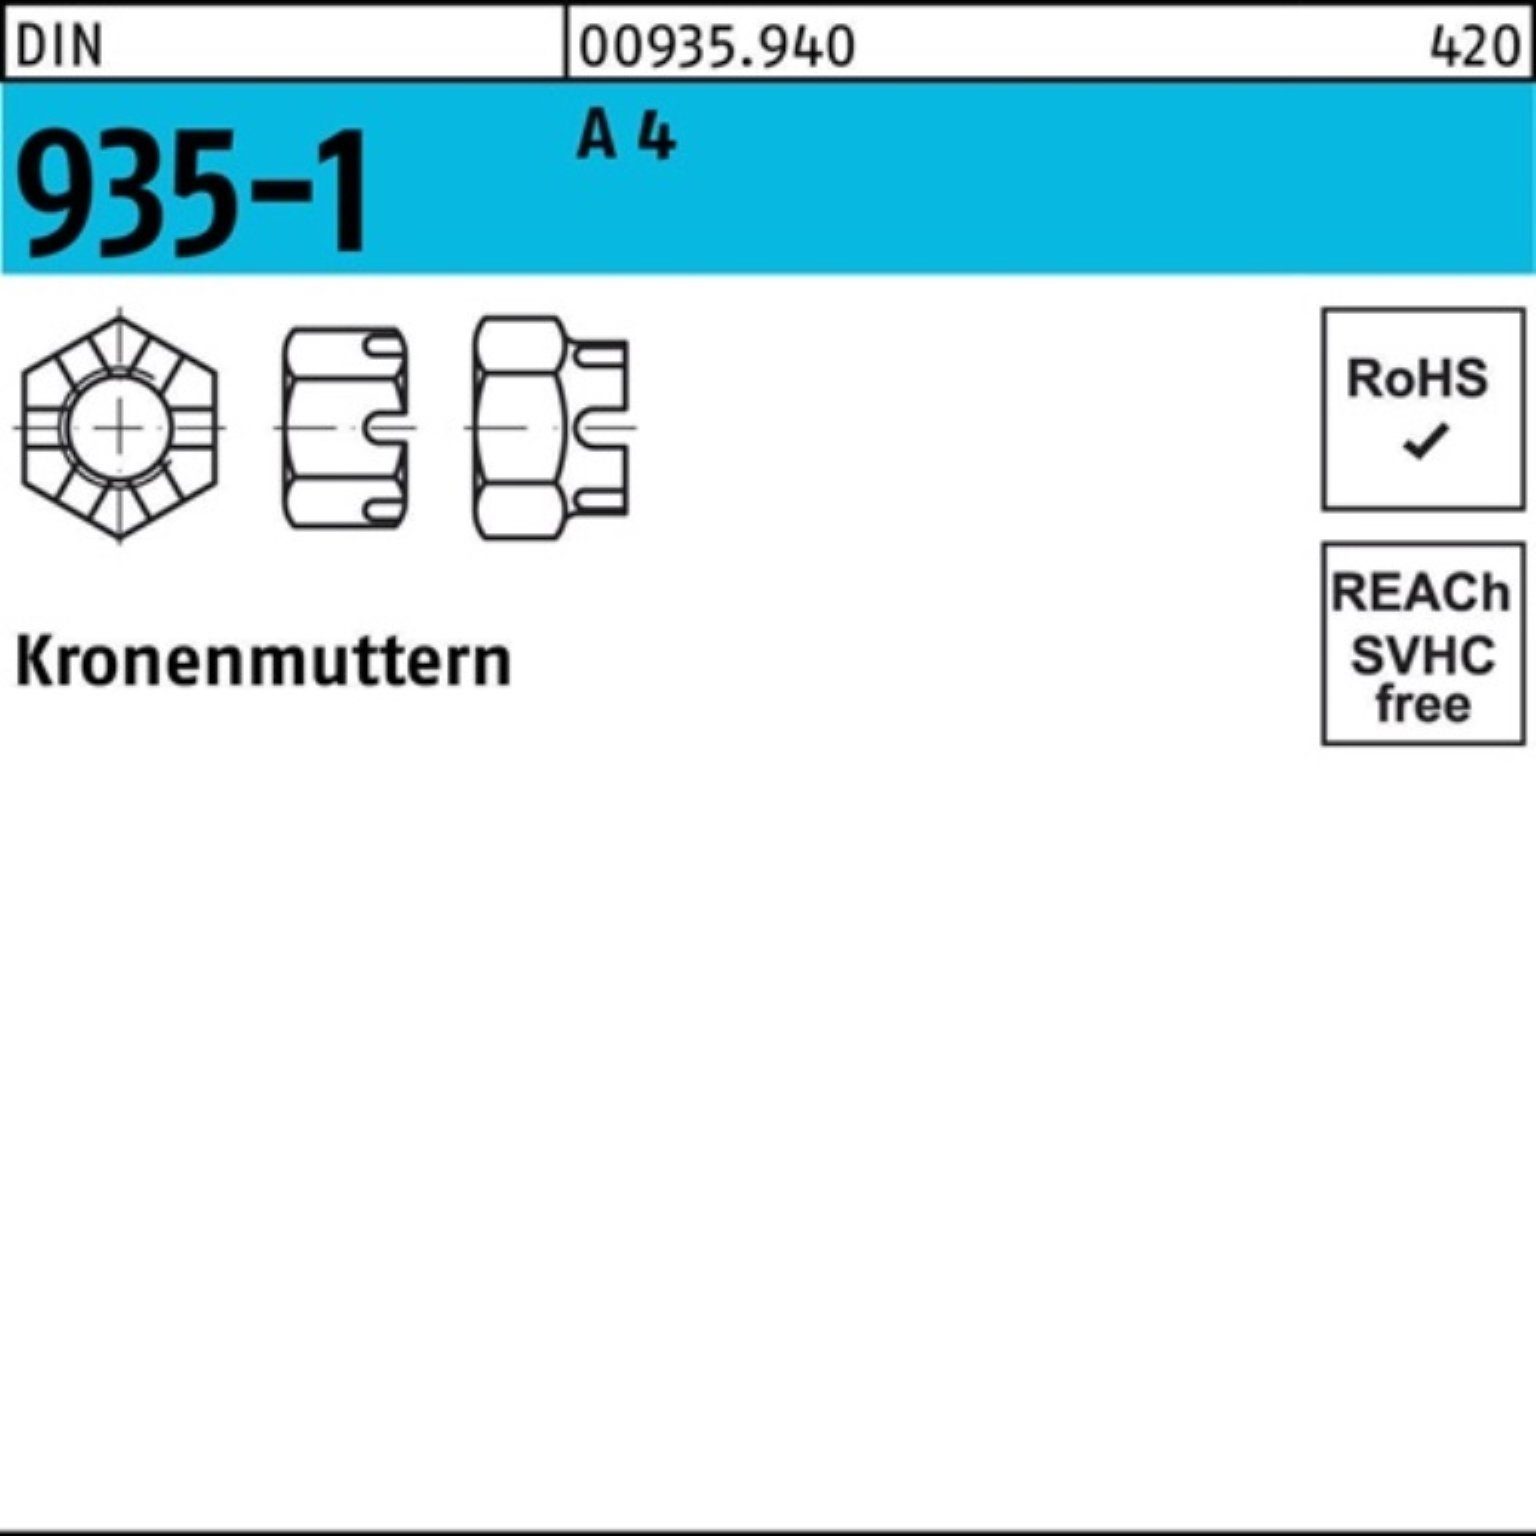 Reyher Kronenmutter 100er 1 Kronenmutter 935-1 DIN DIN A Stück A 935-1 Pack M16 4 Krone 4